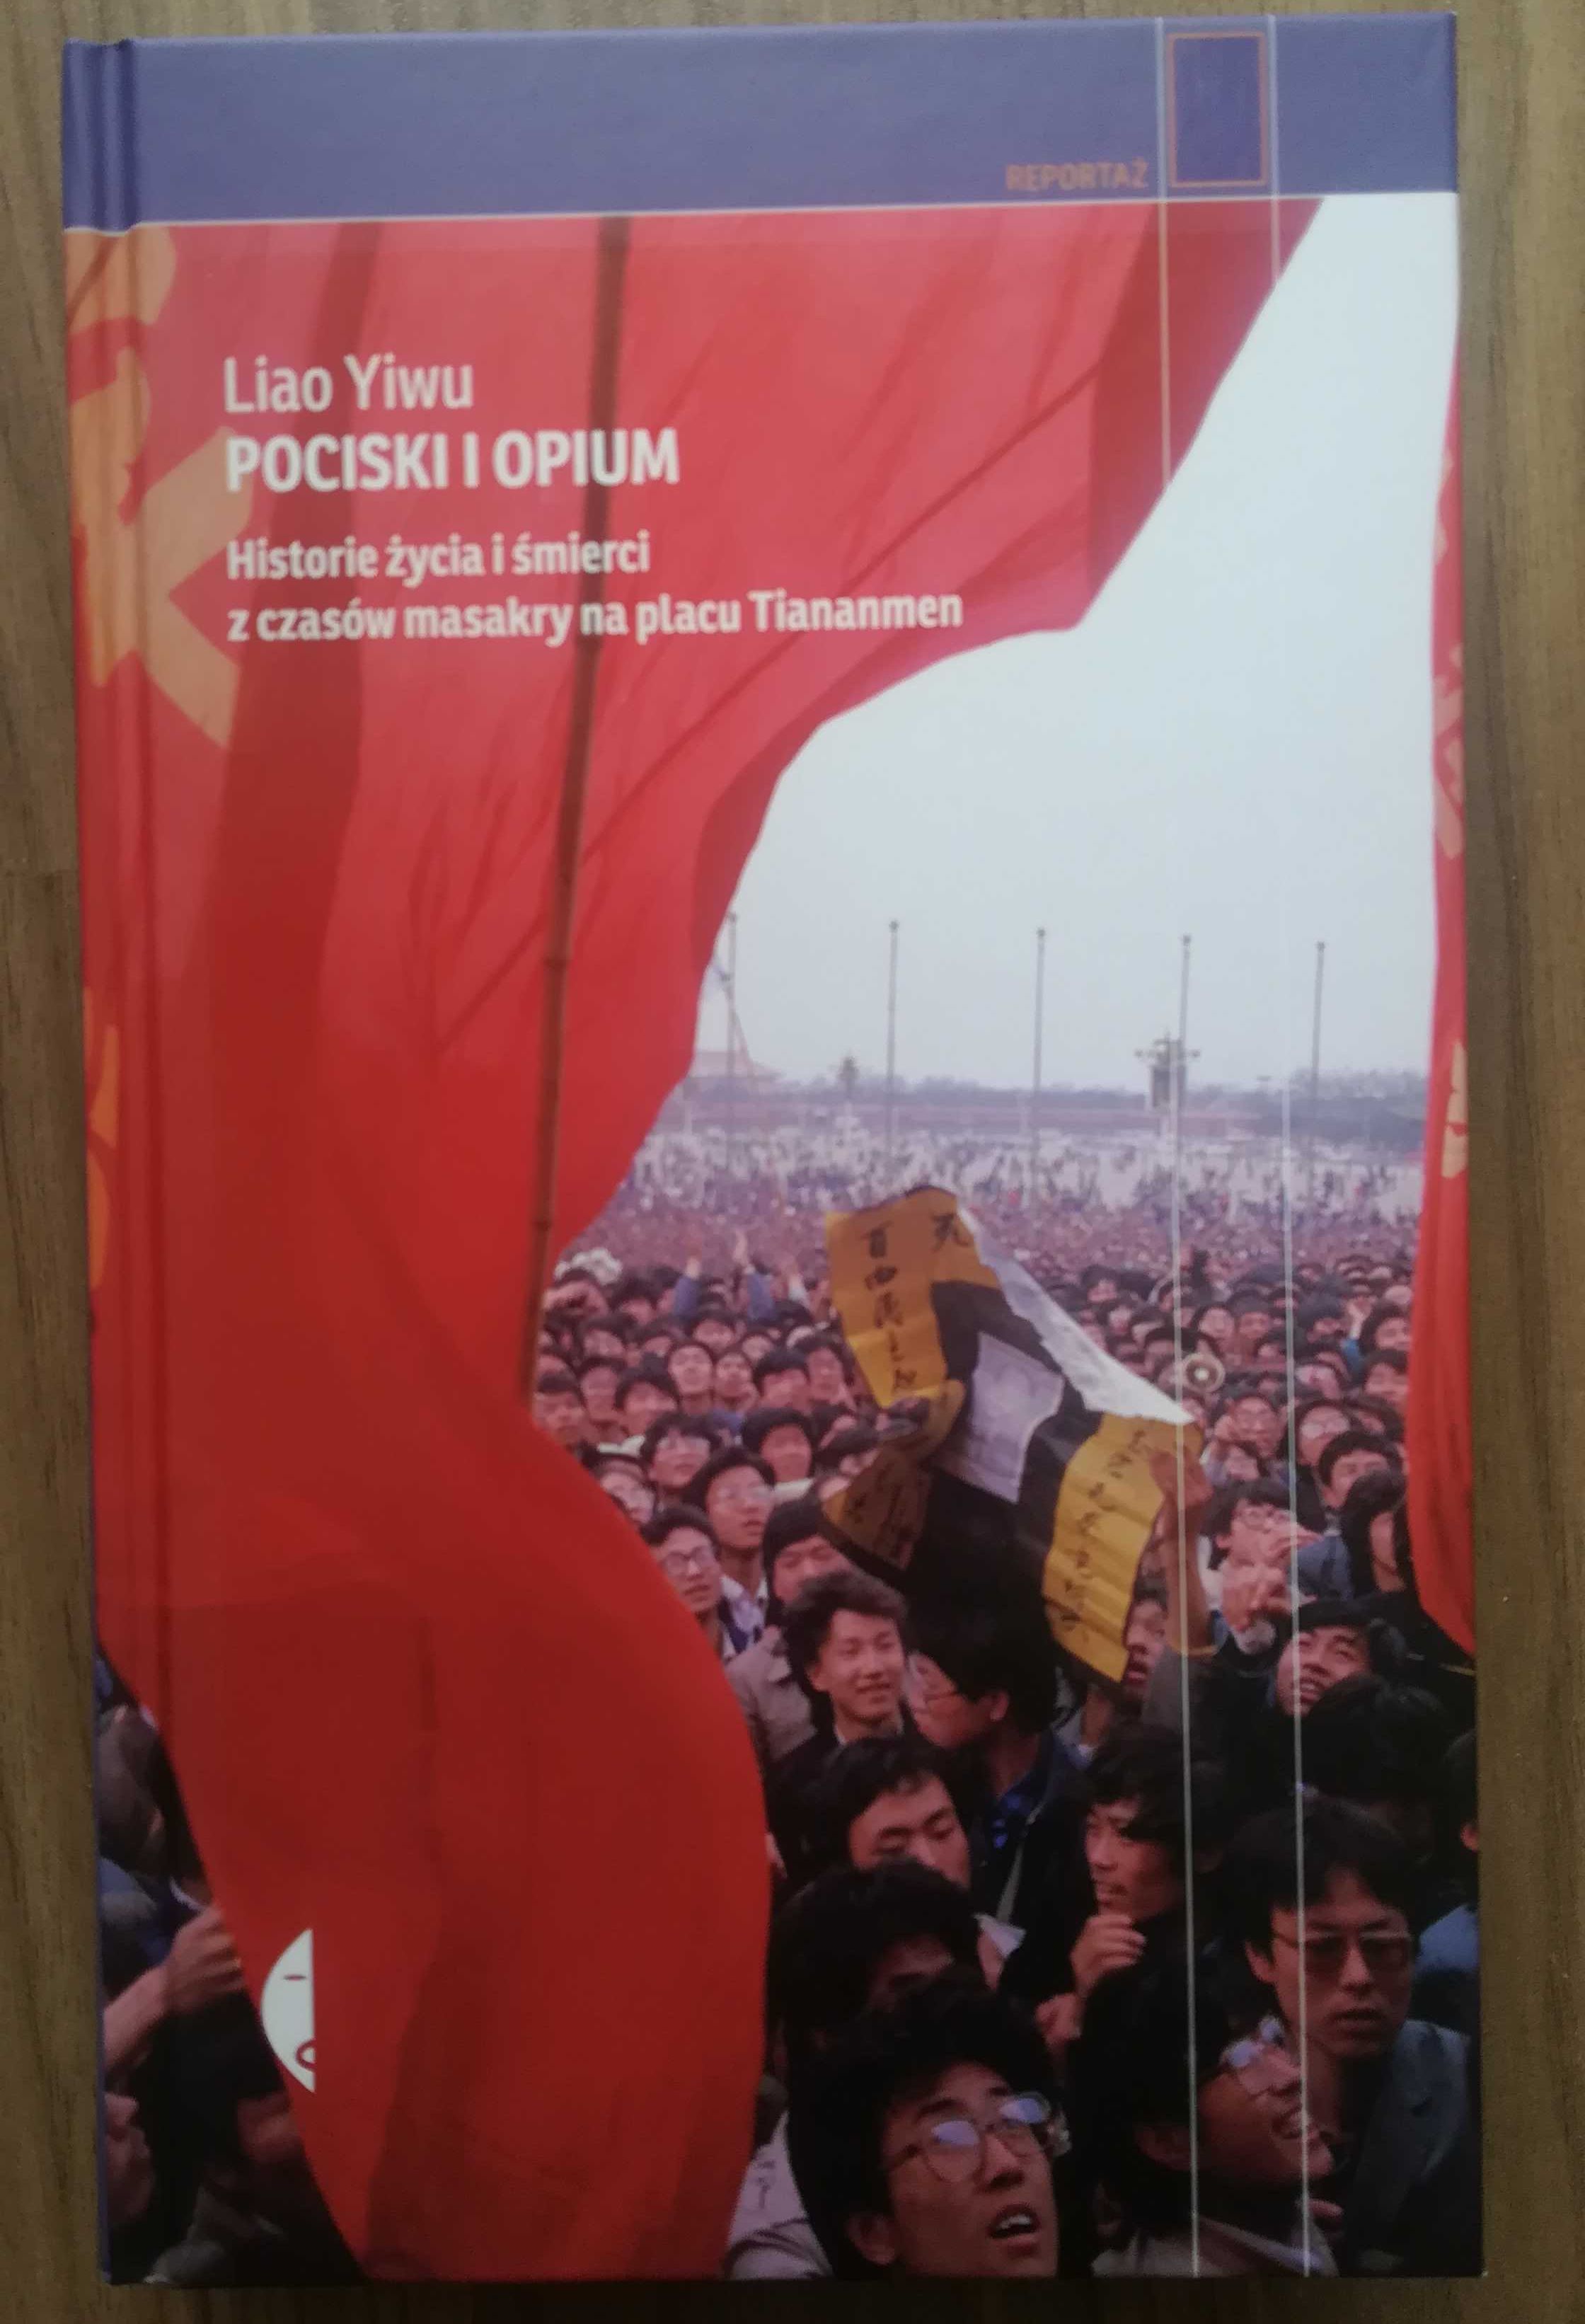 Liao Yiwu "Pociski i opium". Plac Tiananmen. Chiny